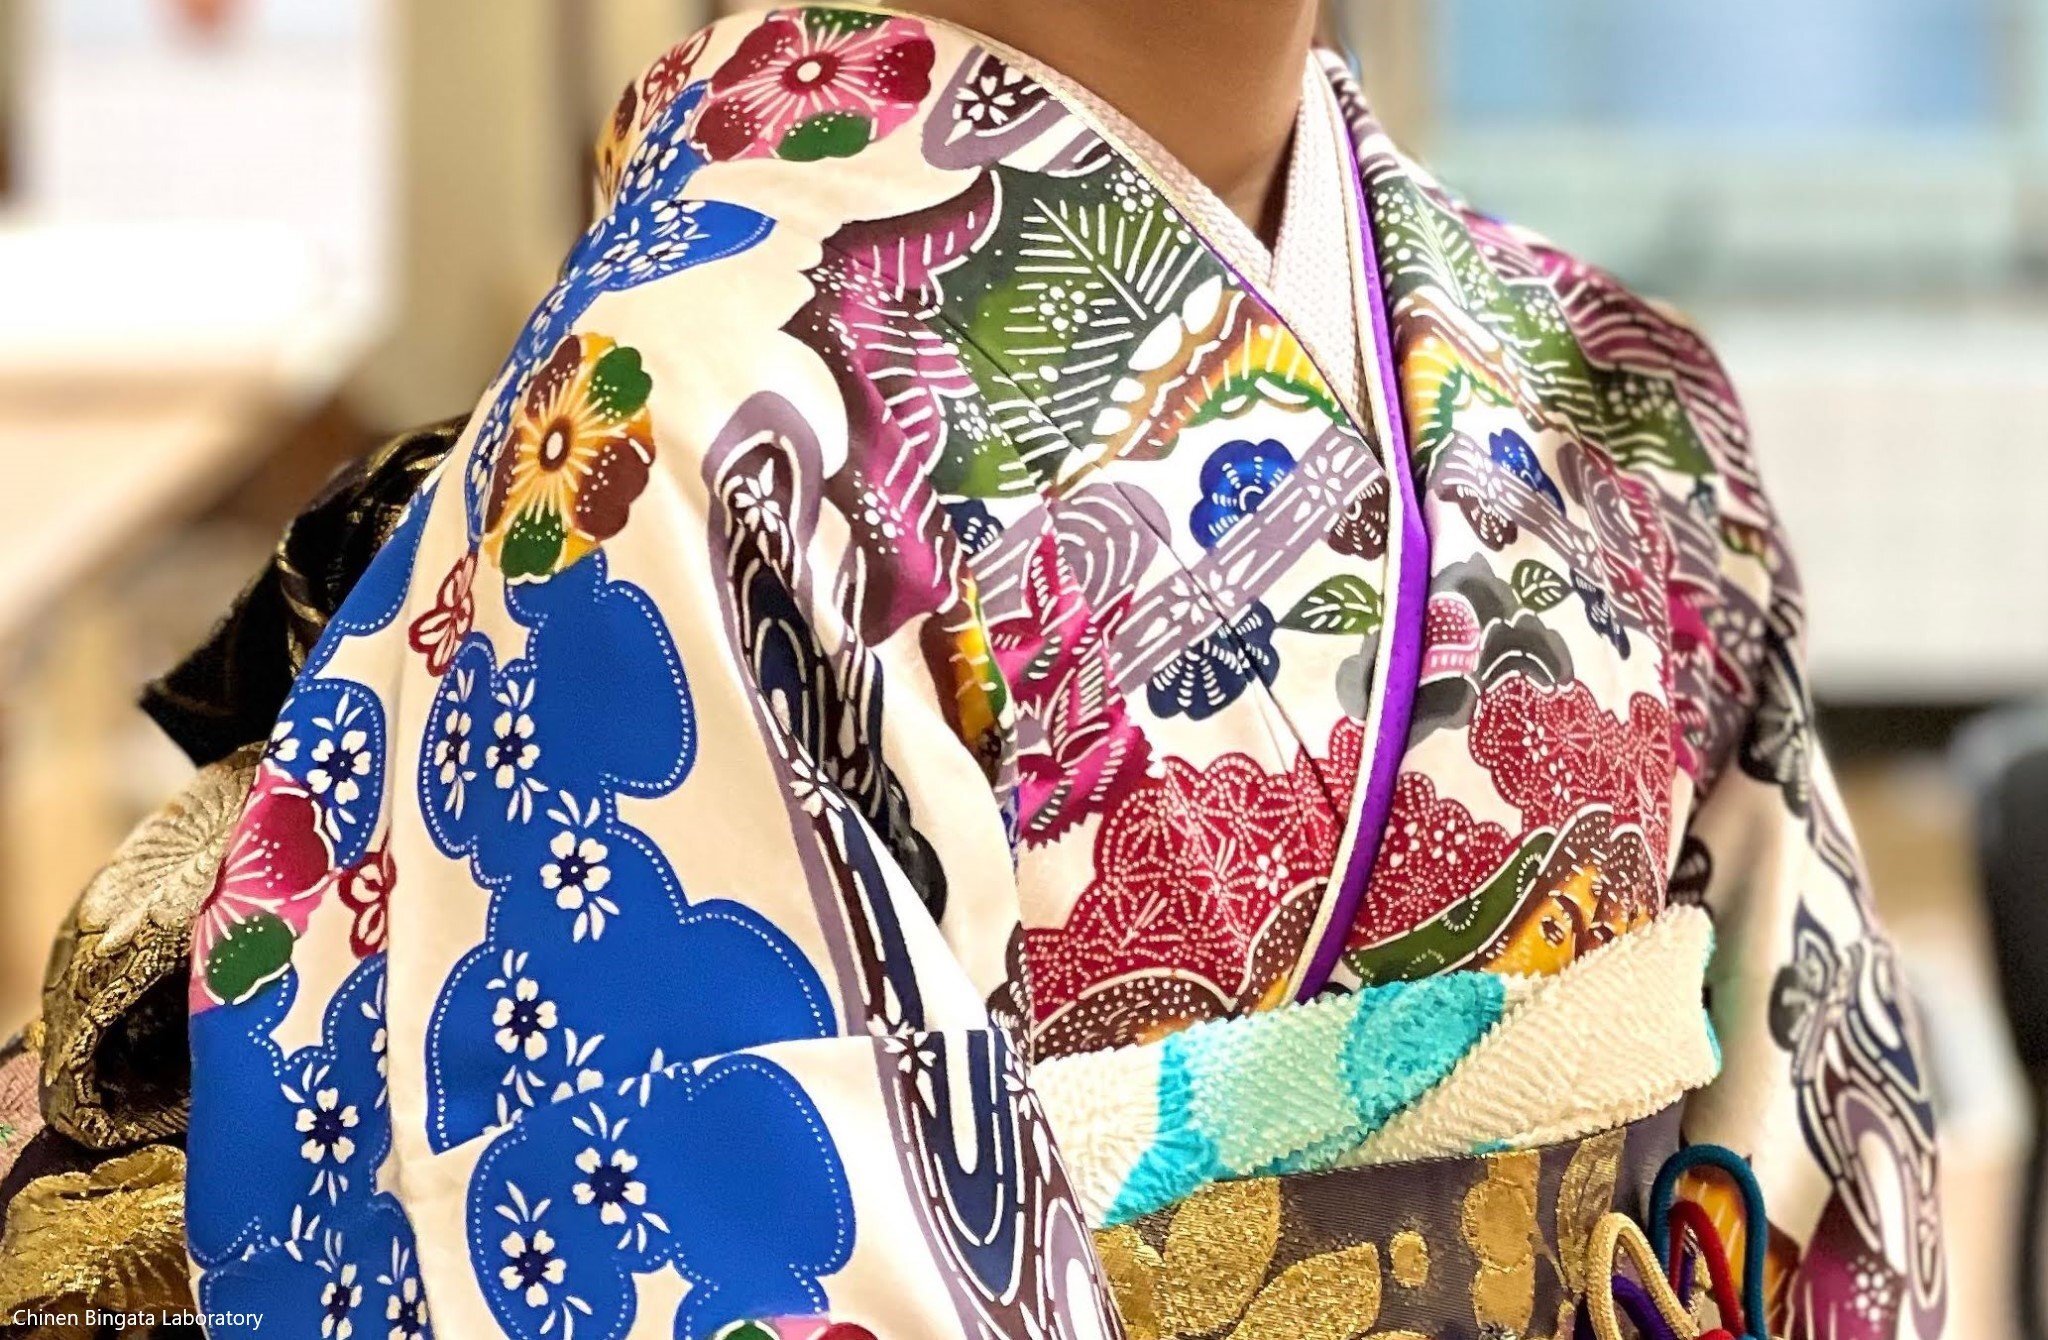 Kimono med bingata-farging. Foto: Chinen Bingata Laboratory.